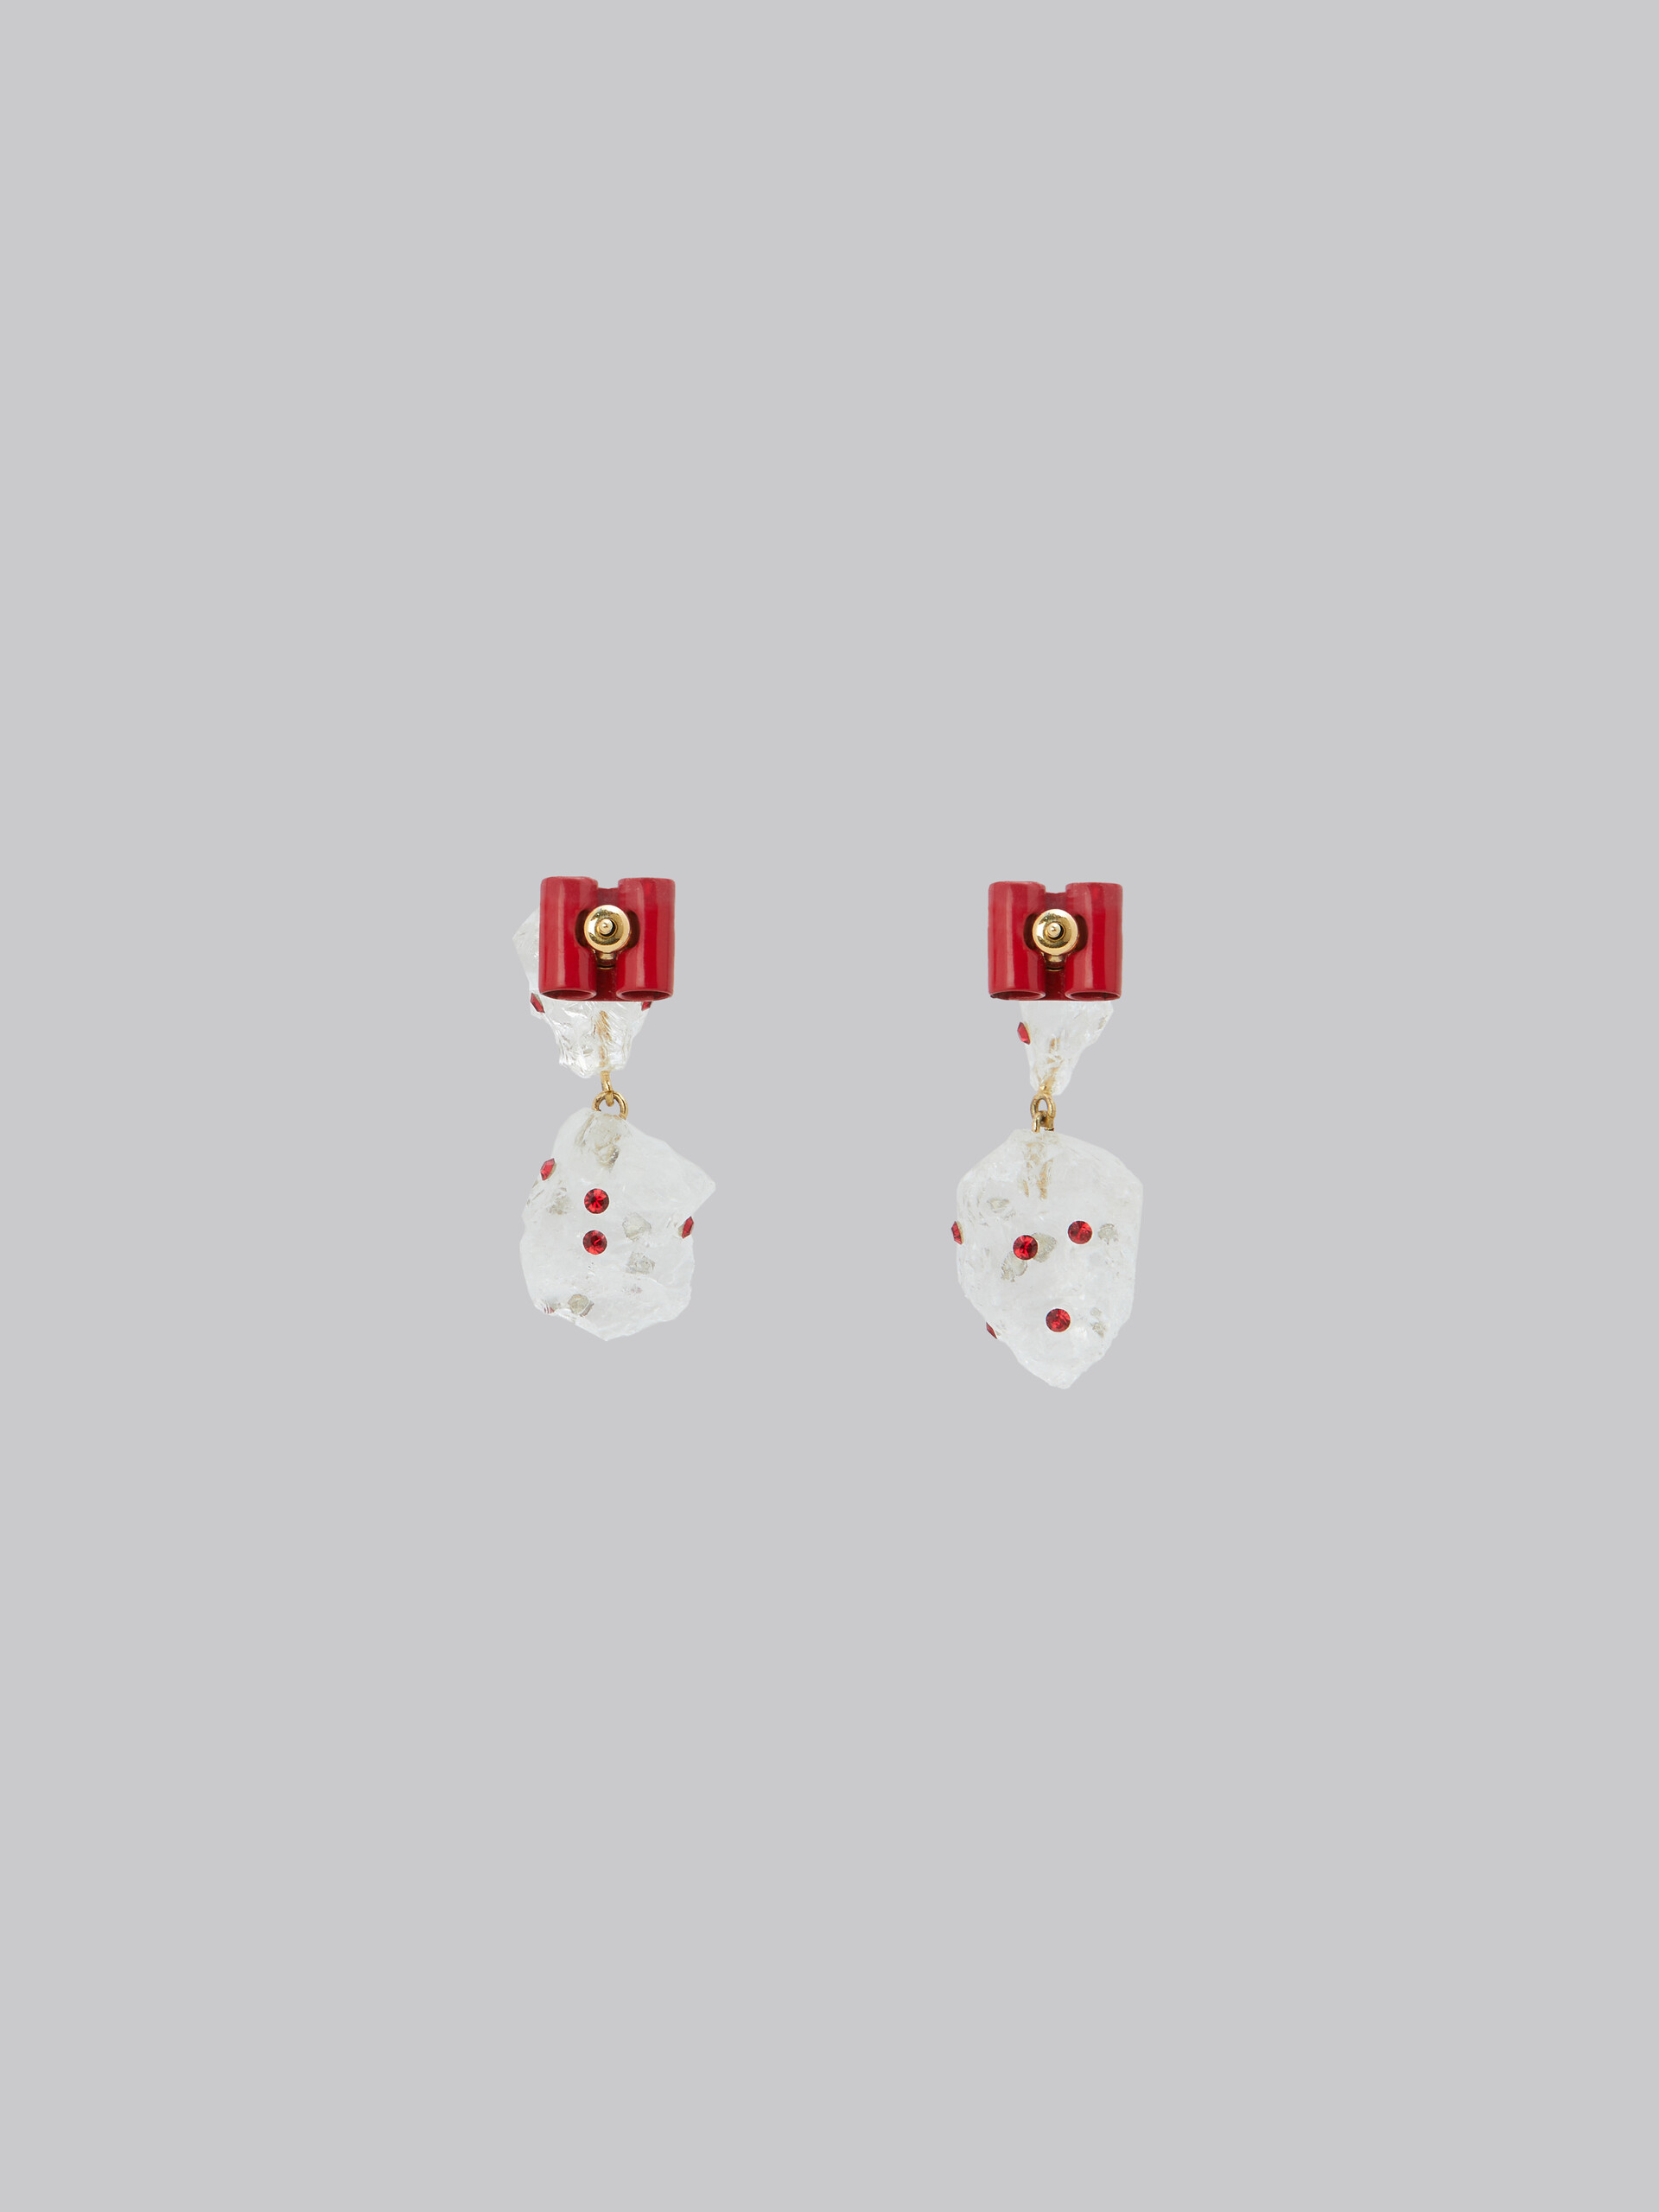 White quartz drop earrings with rhinestone polka dots - Earrings - Image 3